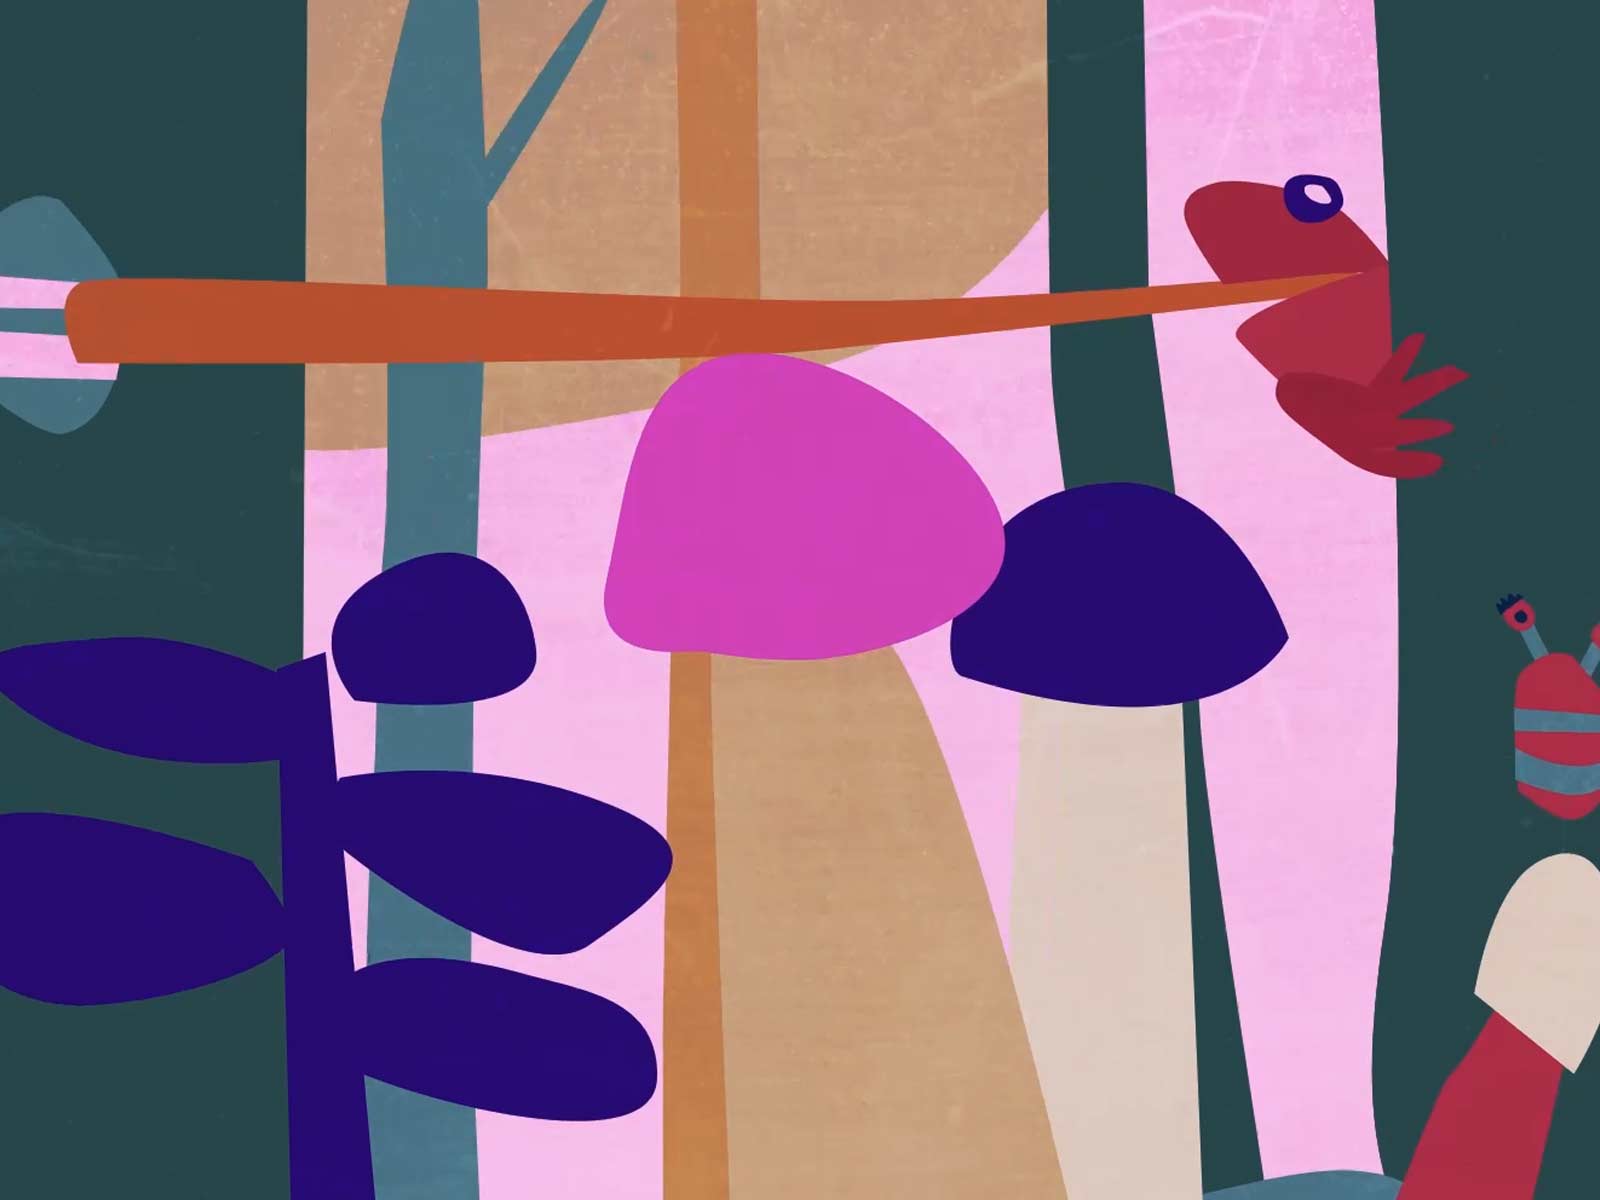  Ein Tag Sonne animation film by sylwia kubus